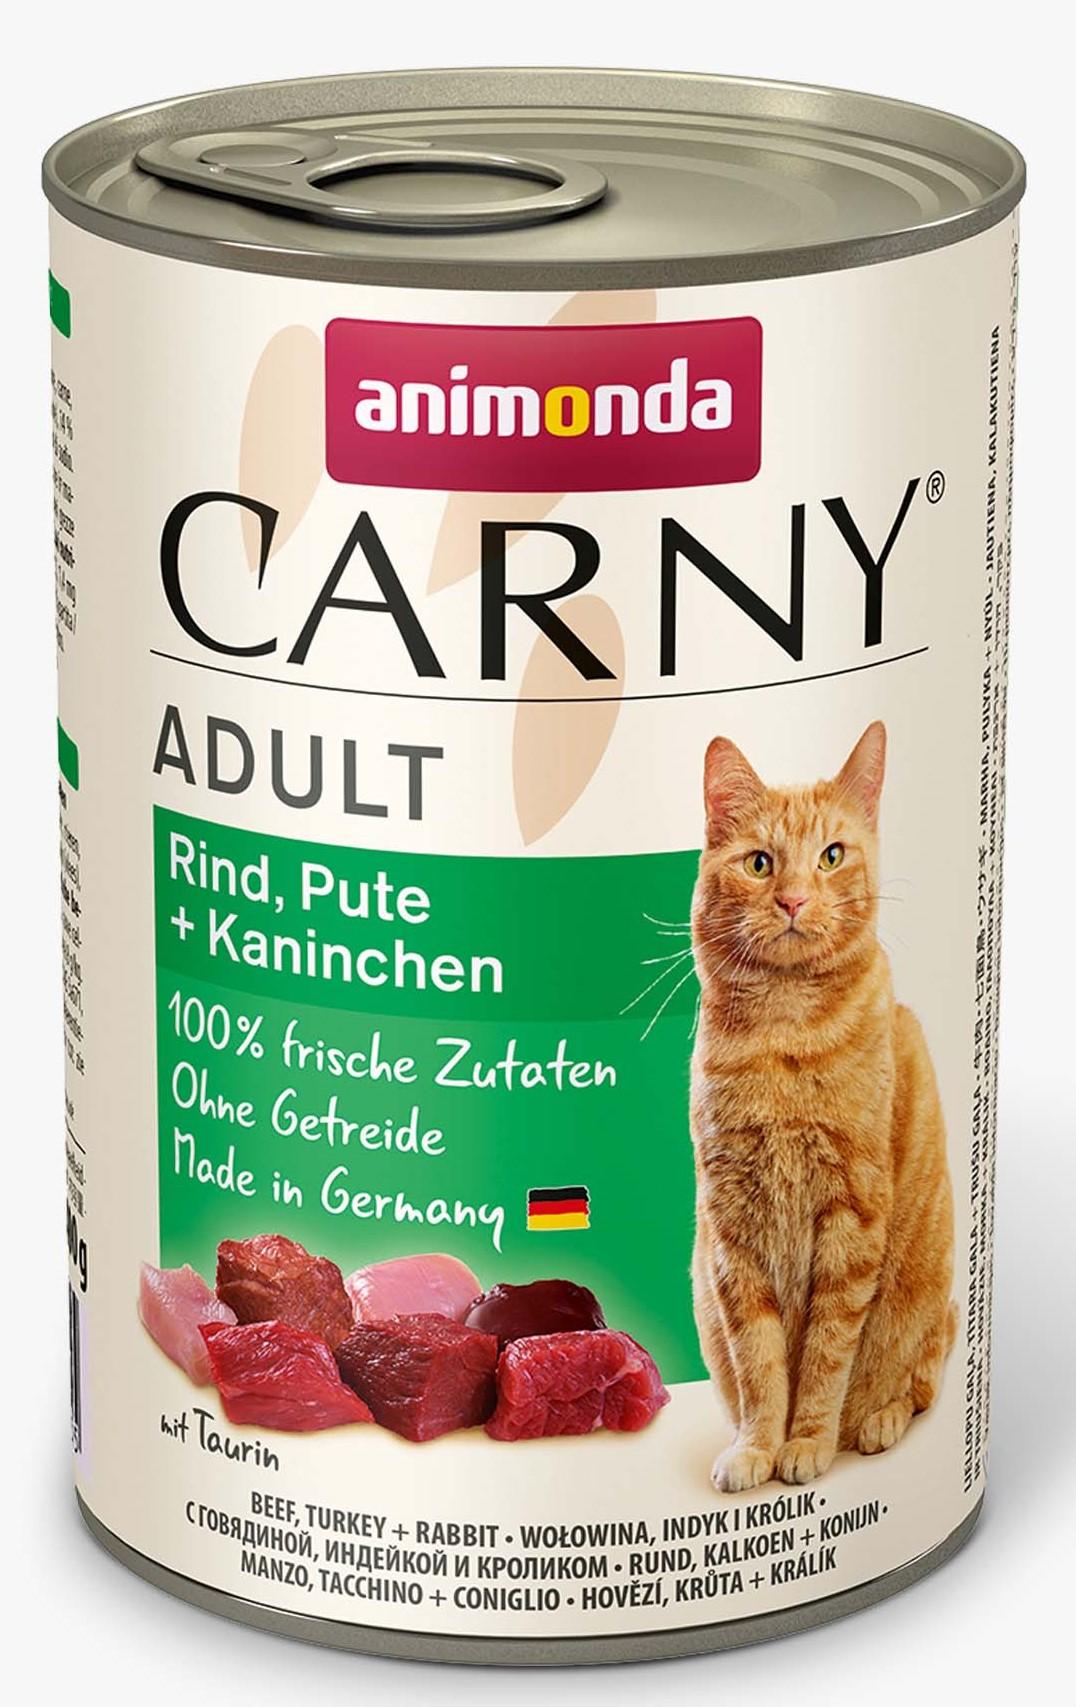 Animonda Carny Adult Beef, Turkey + Rabbit 